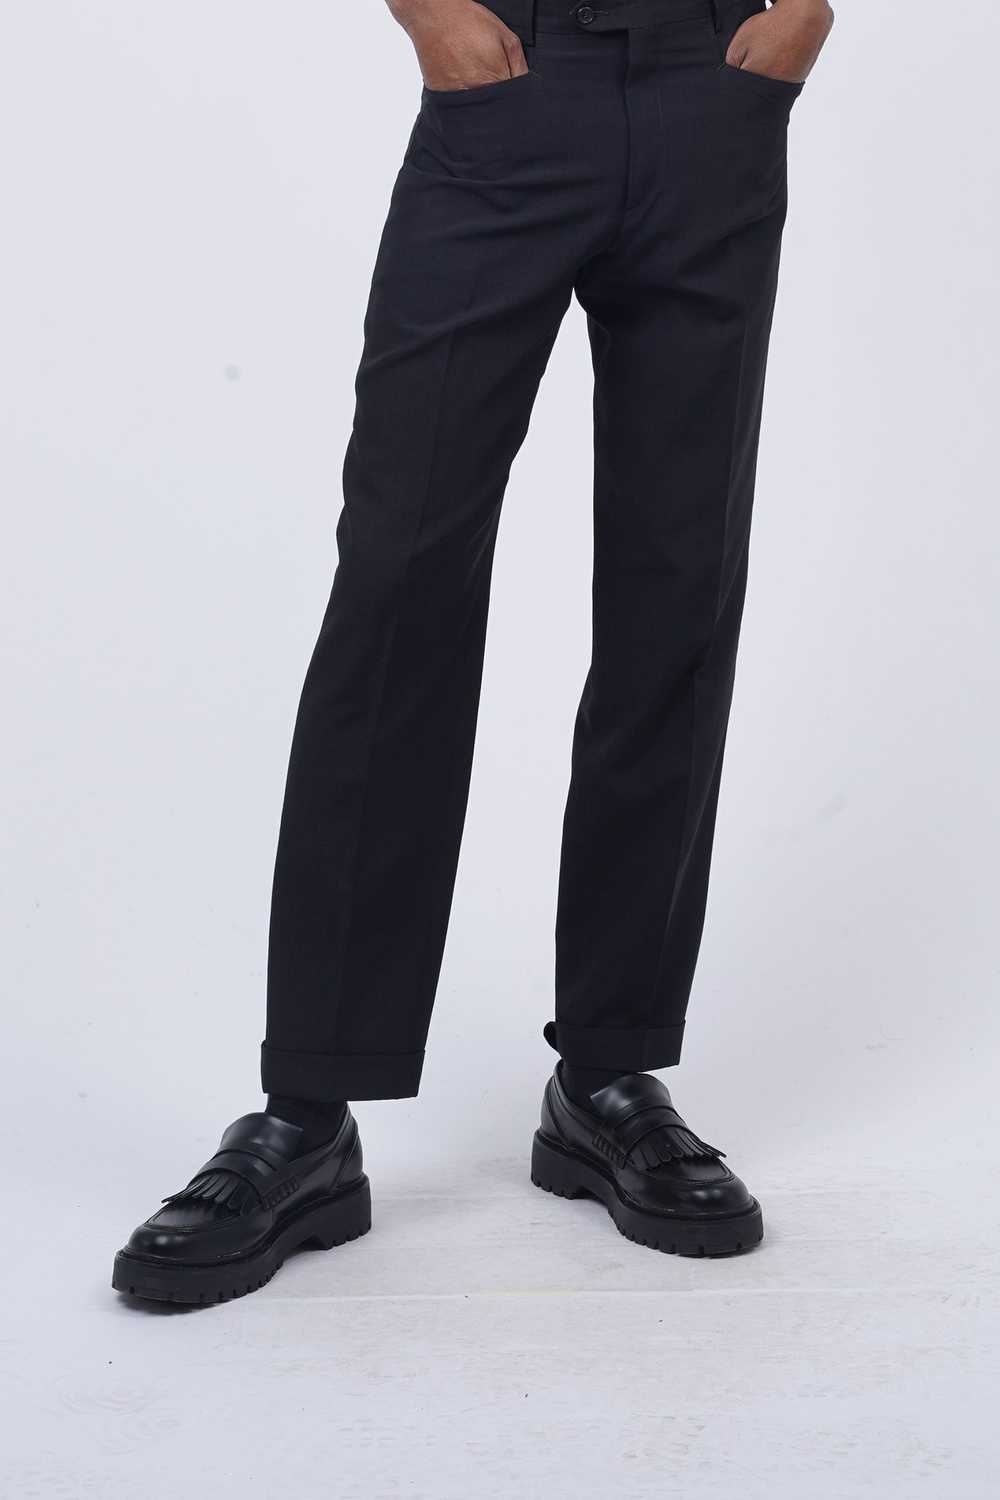 Vintage Vintage 90's Black Tailored Trousers - image 1